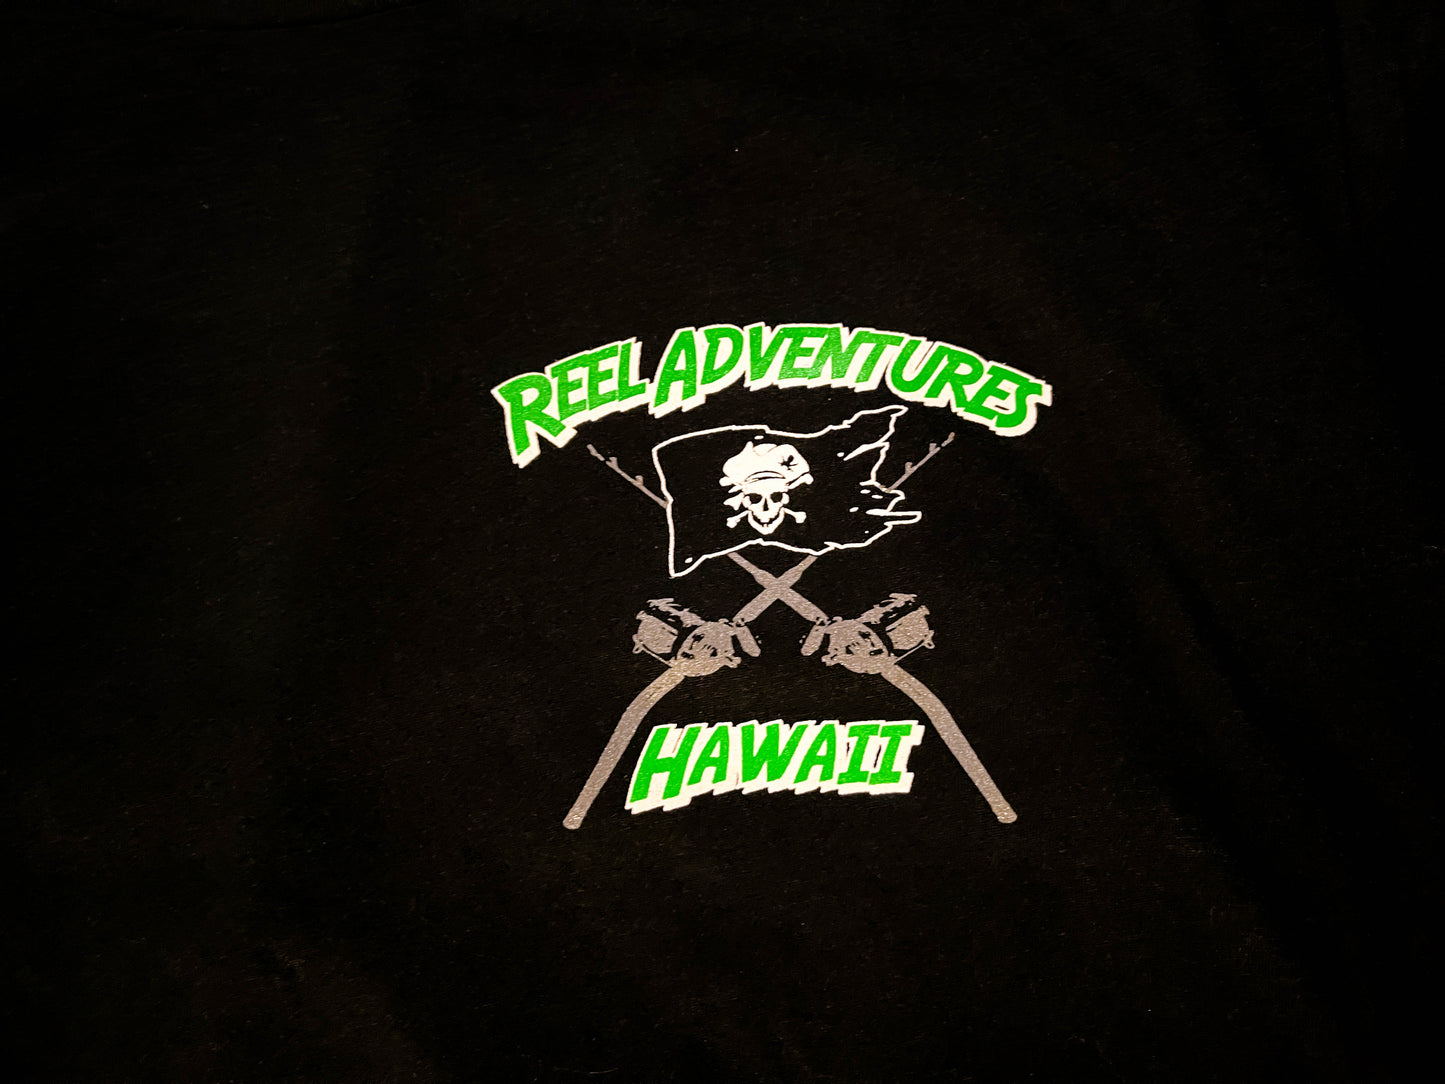 Reel Adventure T-Shirt Black